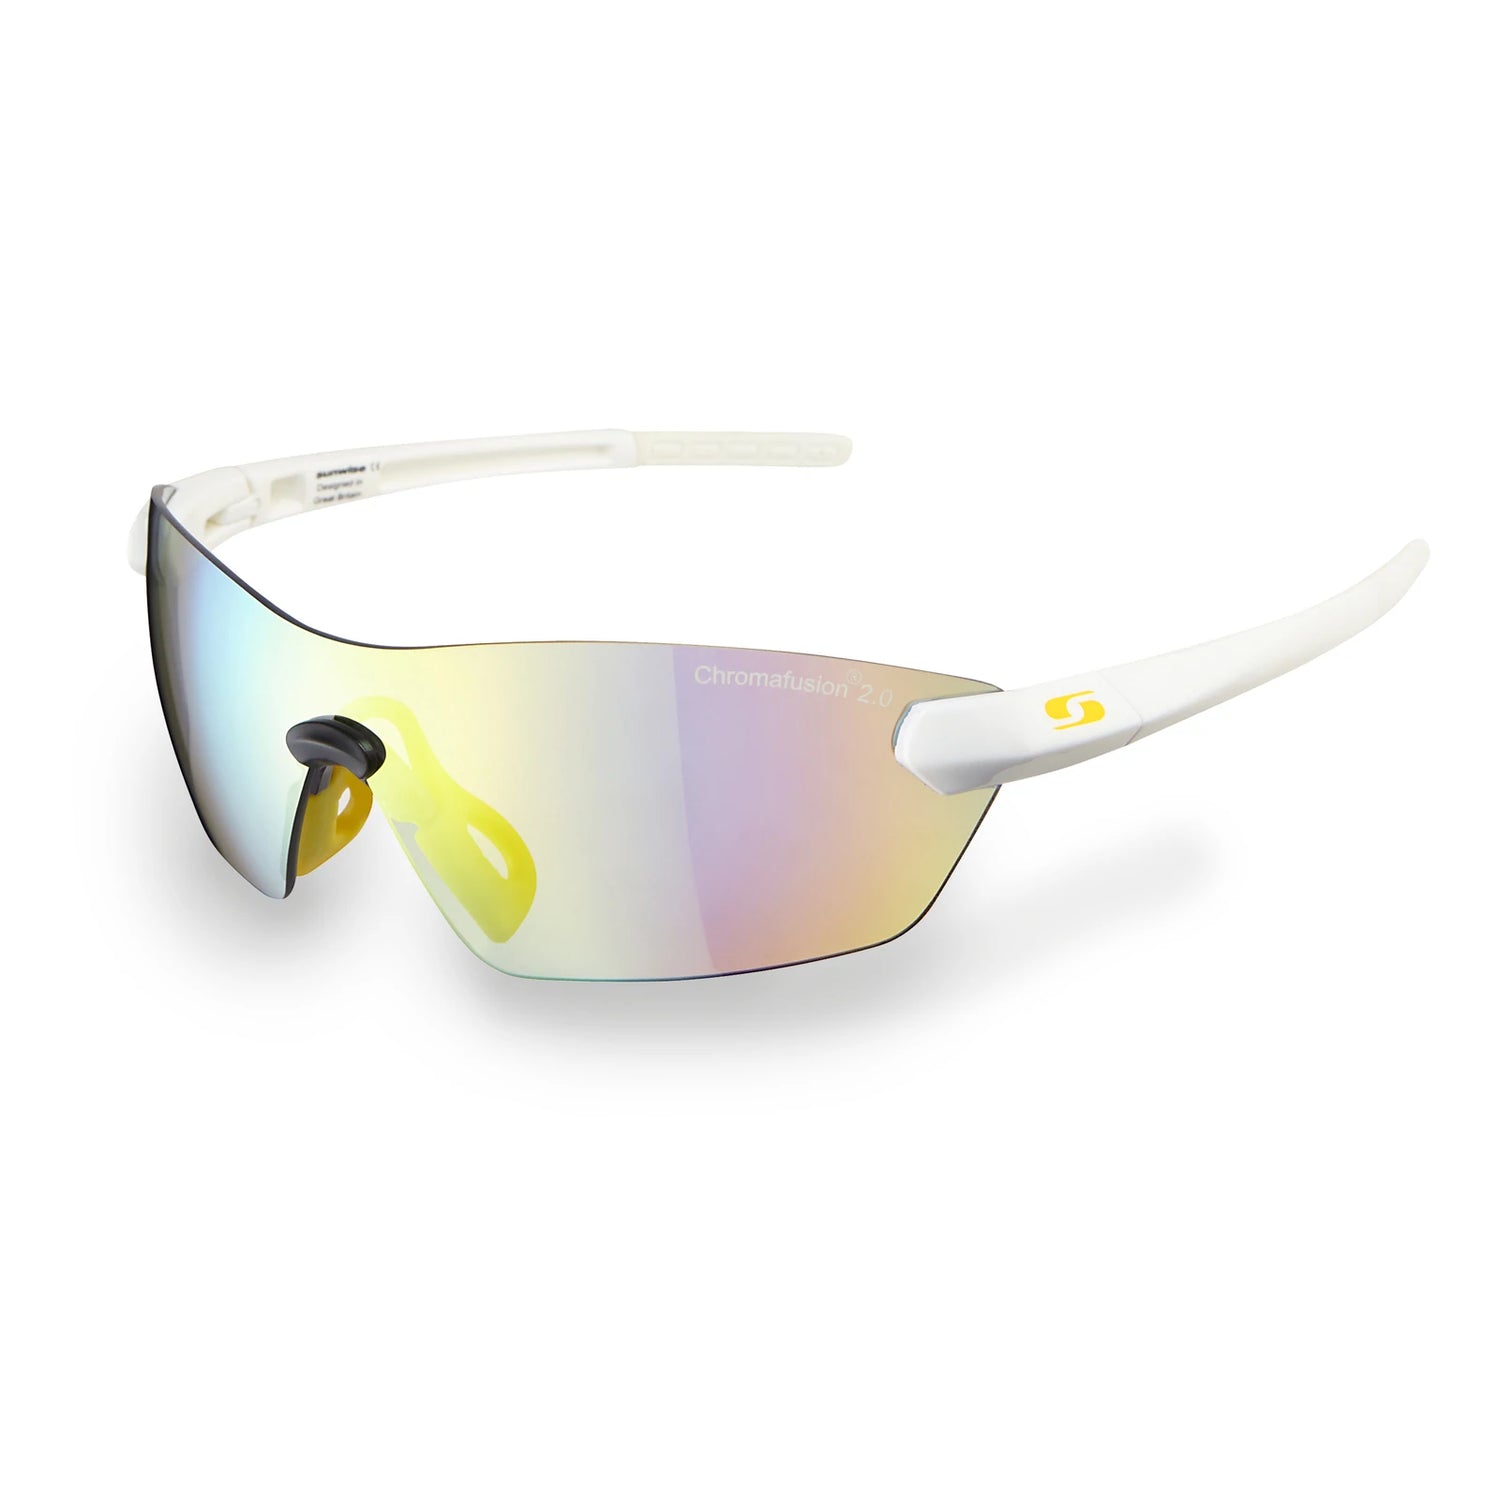 Sunwise Chromafusion 2.0 Hasting Sports Sunglasses